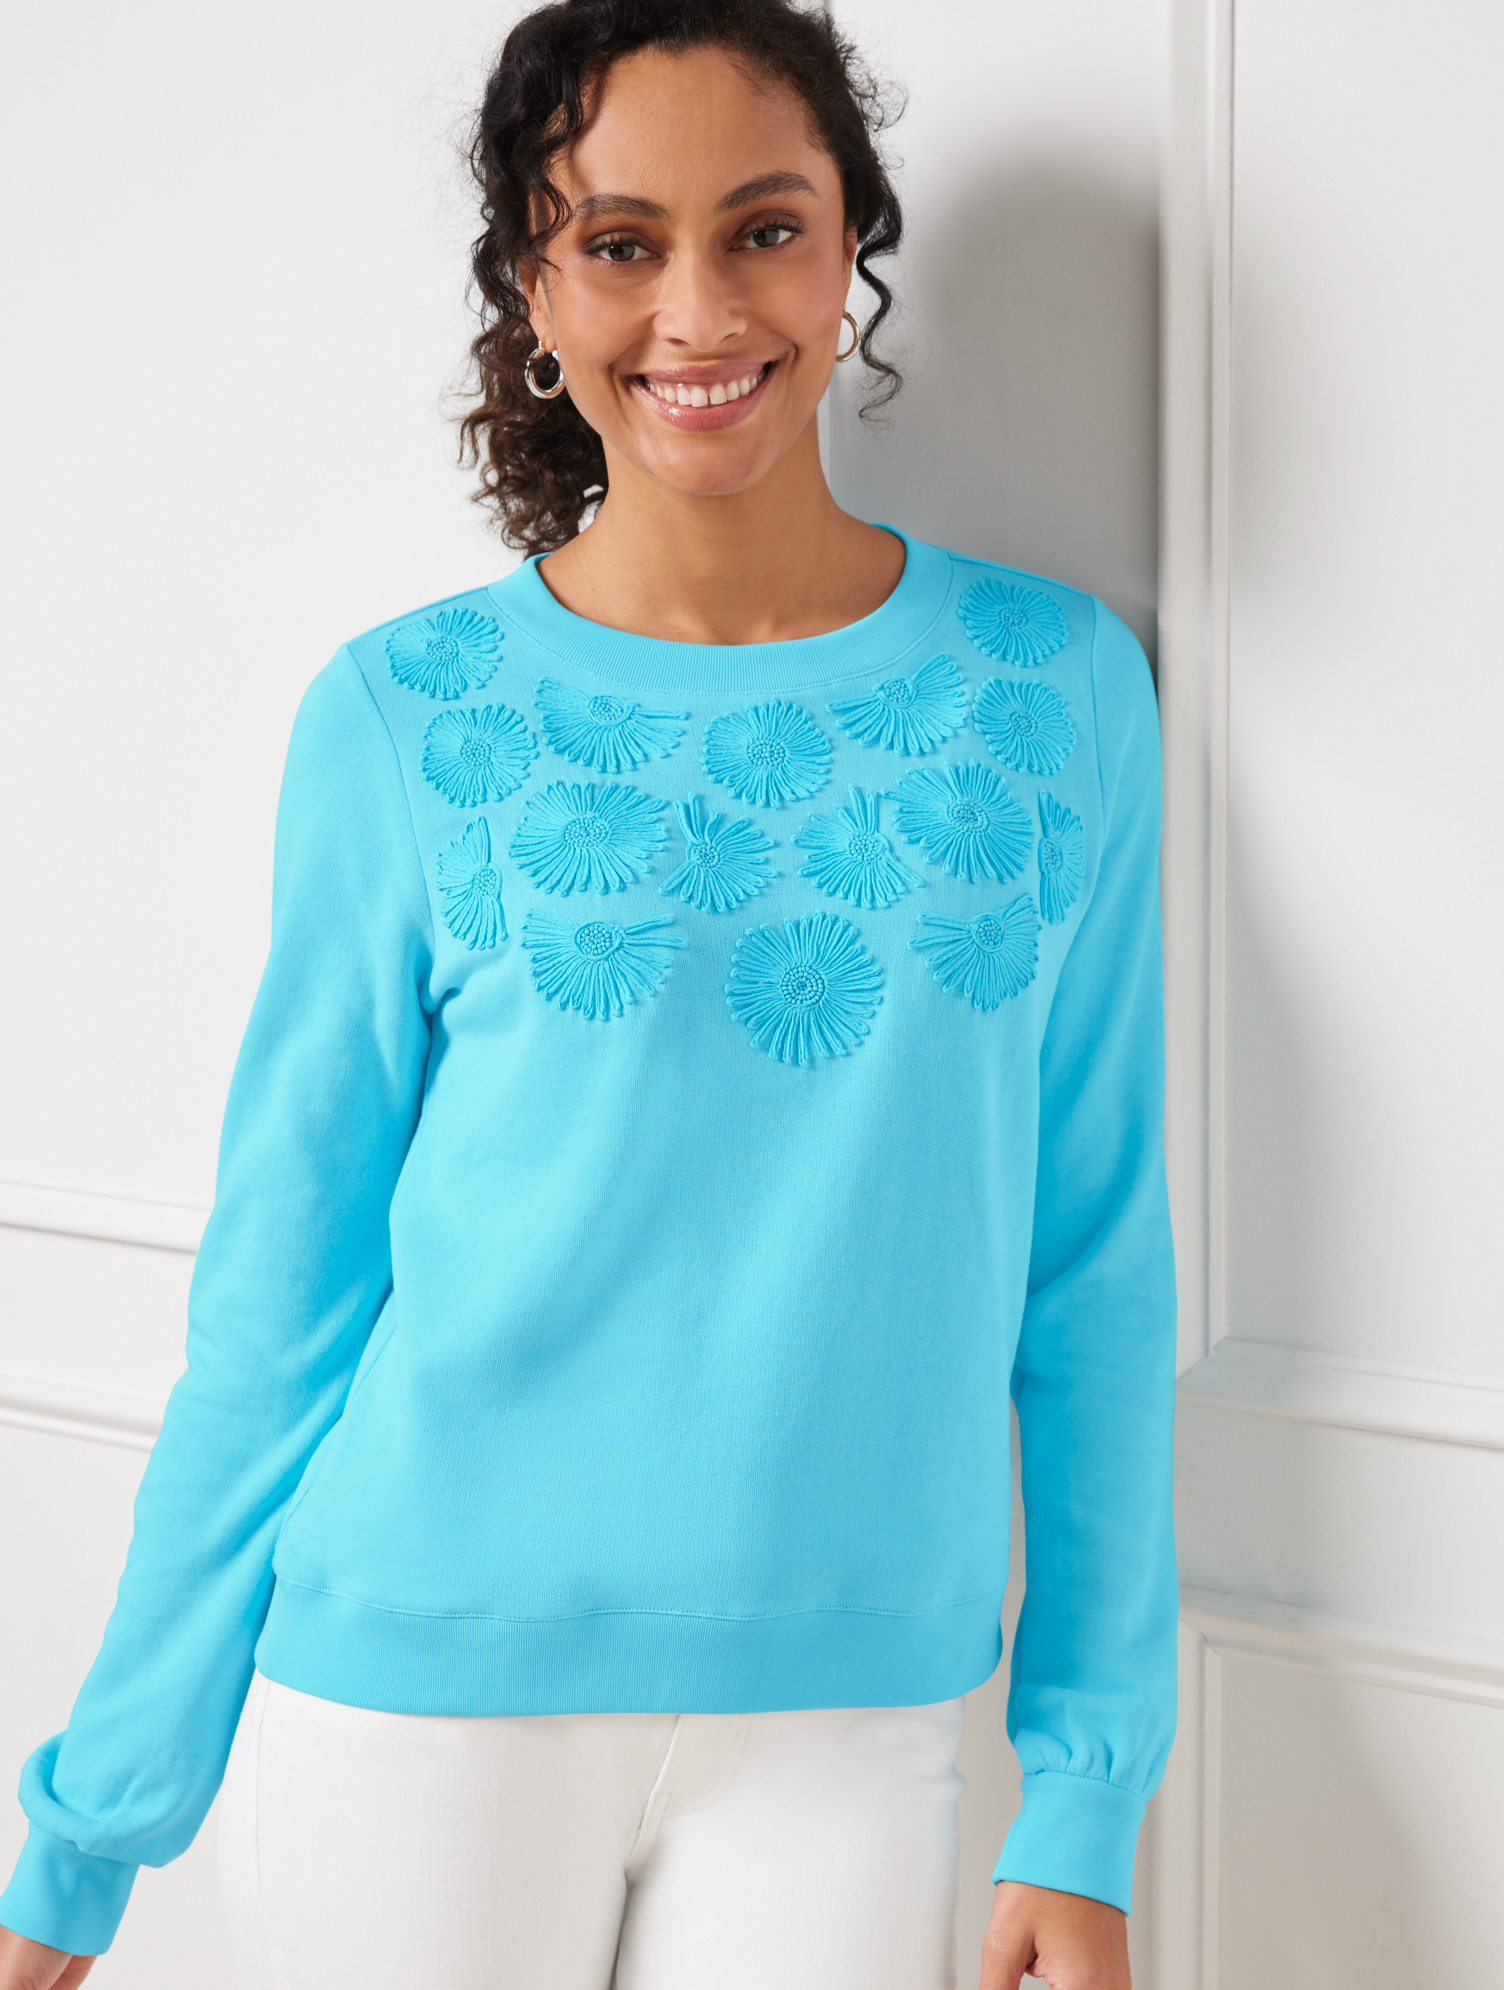 Talbots Embroidered Crewneck Sweatshirt - Lovely Blue - Small - 100% Cotton